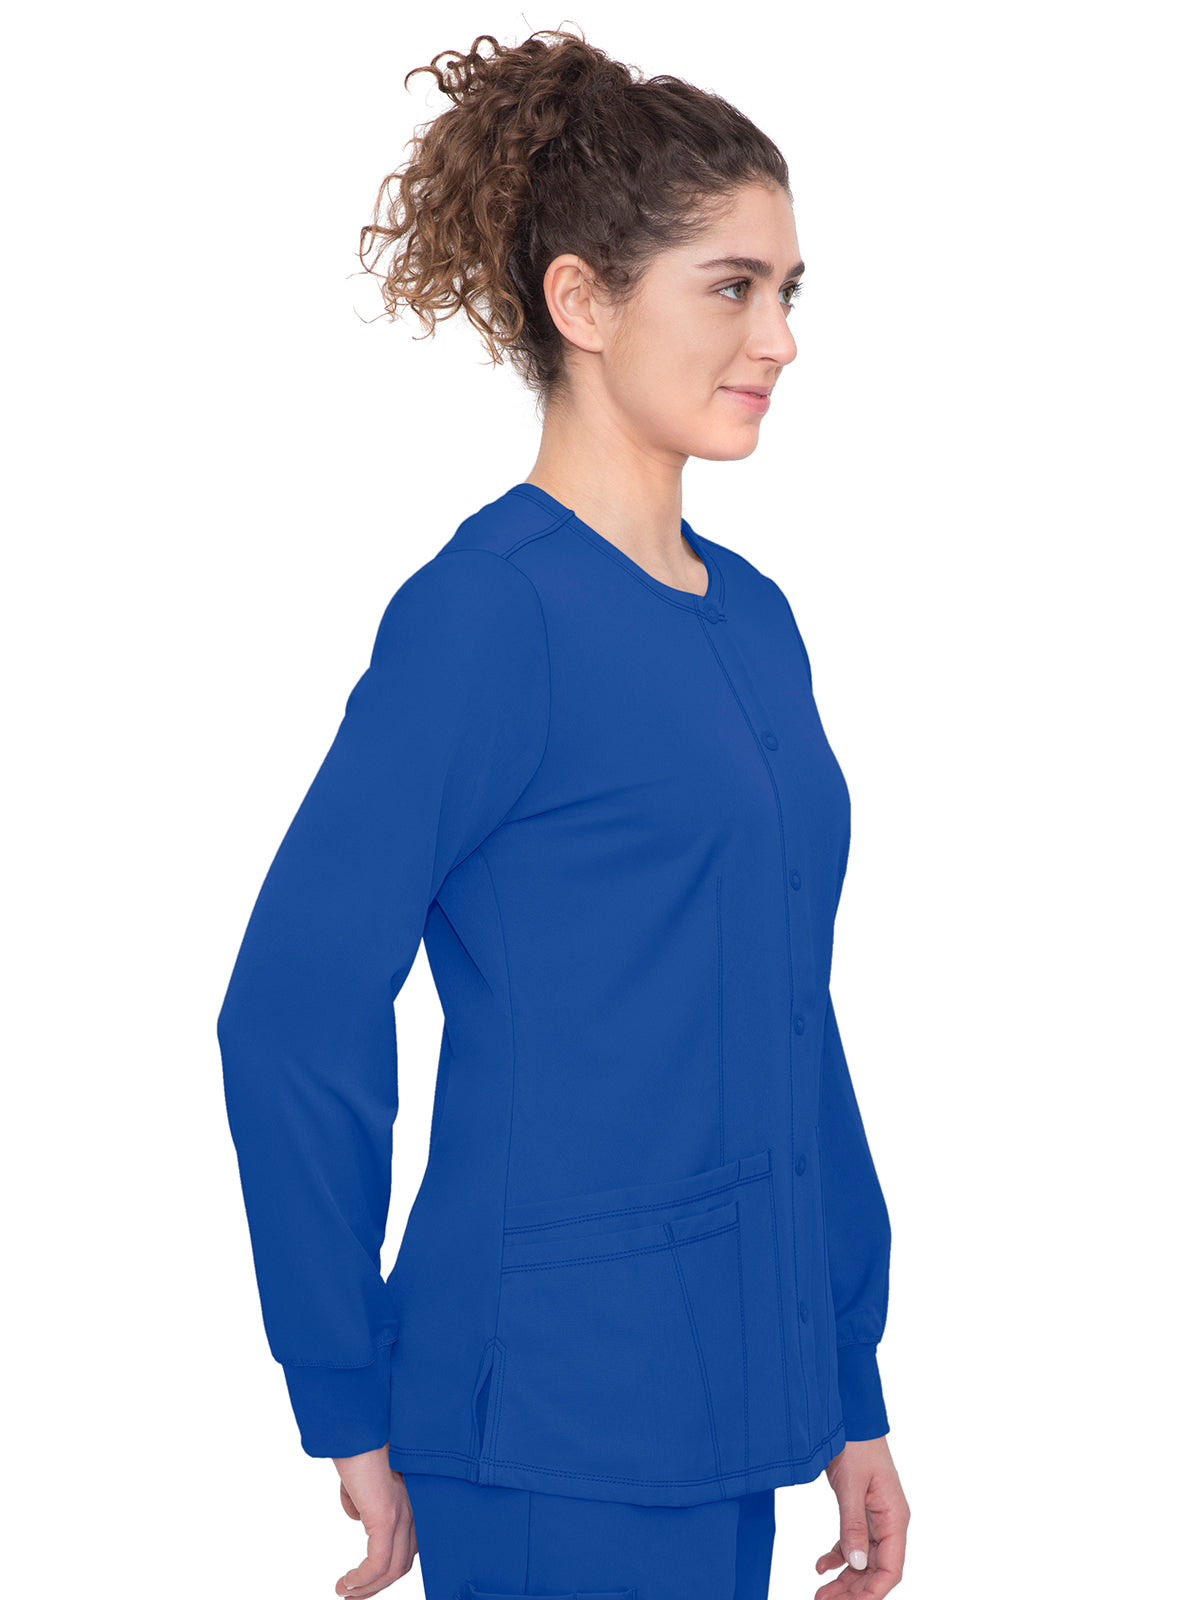 Women's Snap Front Scrub Jacket - 5500 - Galaxy Blue